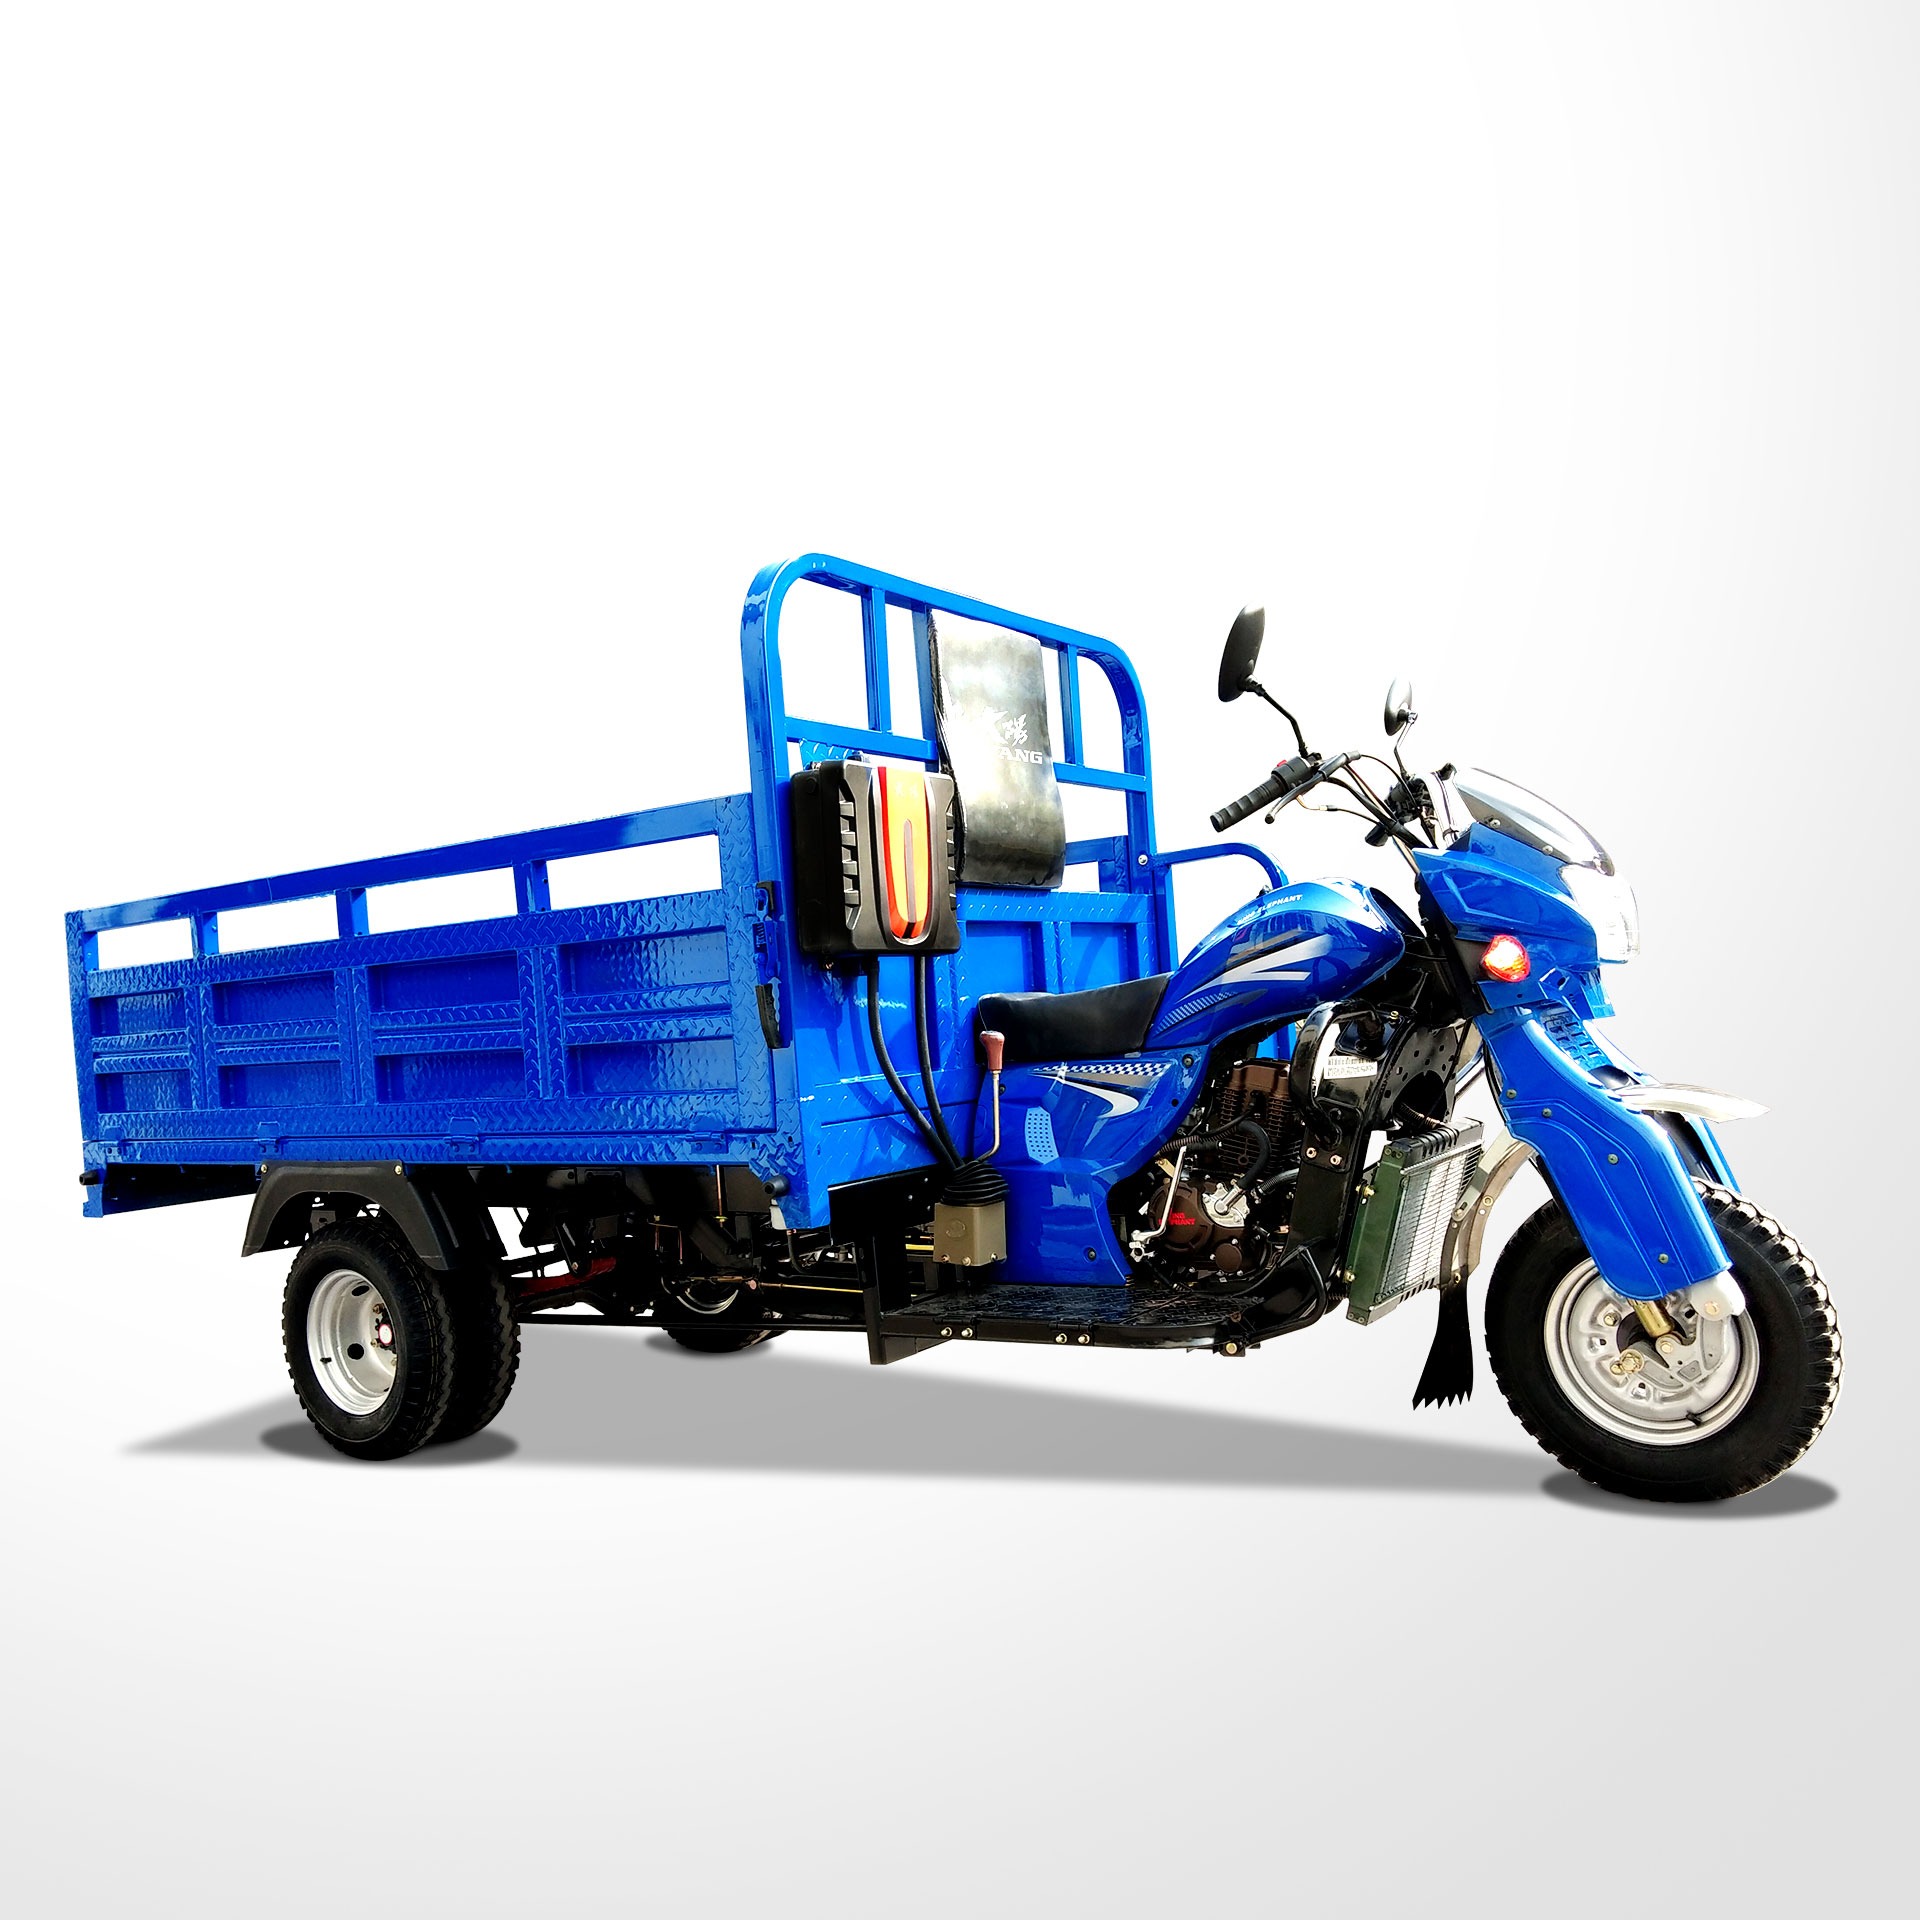 China Trike Motorcycle Adult 3wheels 200cc 250cc tricycle engine heavy loading cargo box gaso